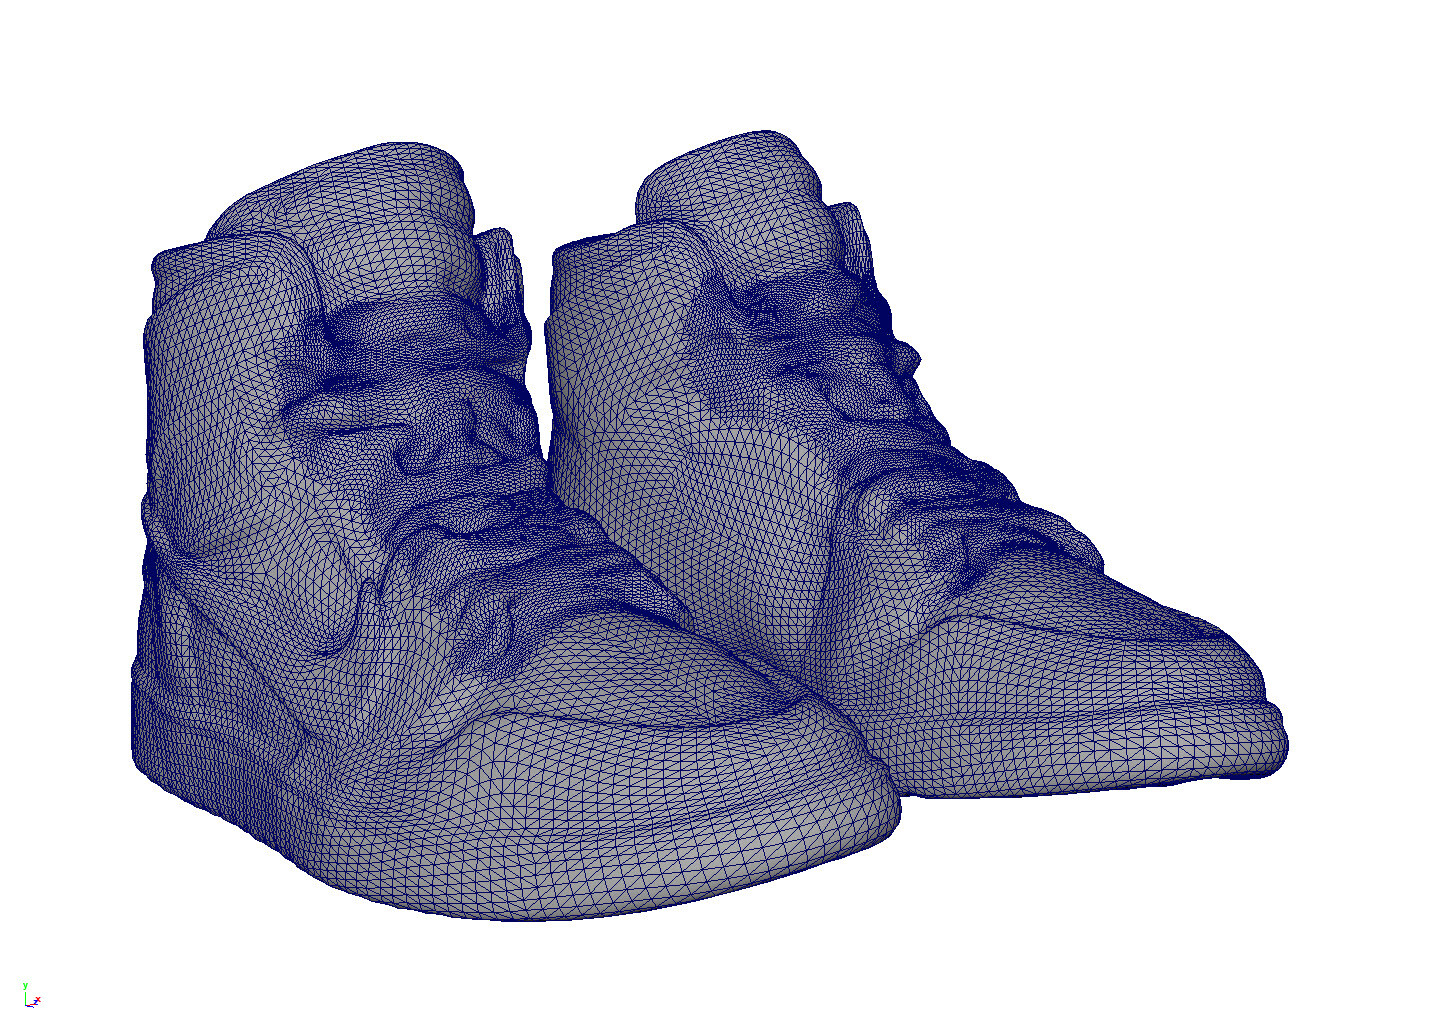 ArtStation - Nike Air Jordan 1 high x Louis vuitton footwear yeezy